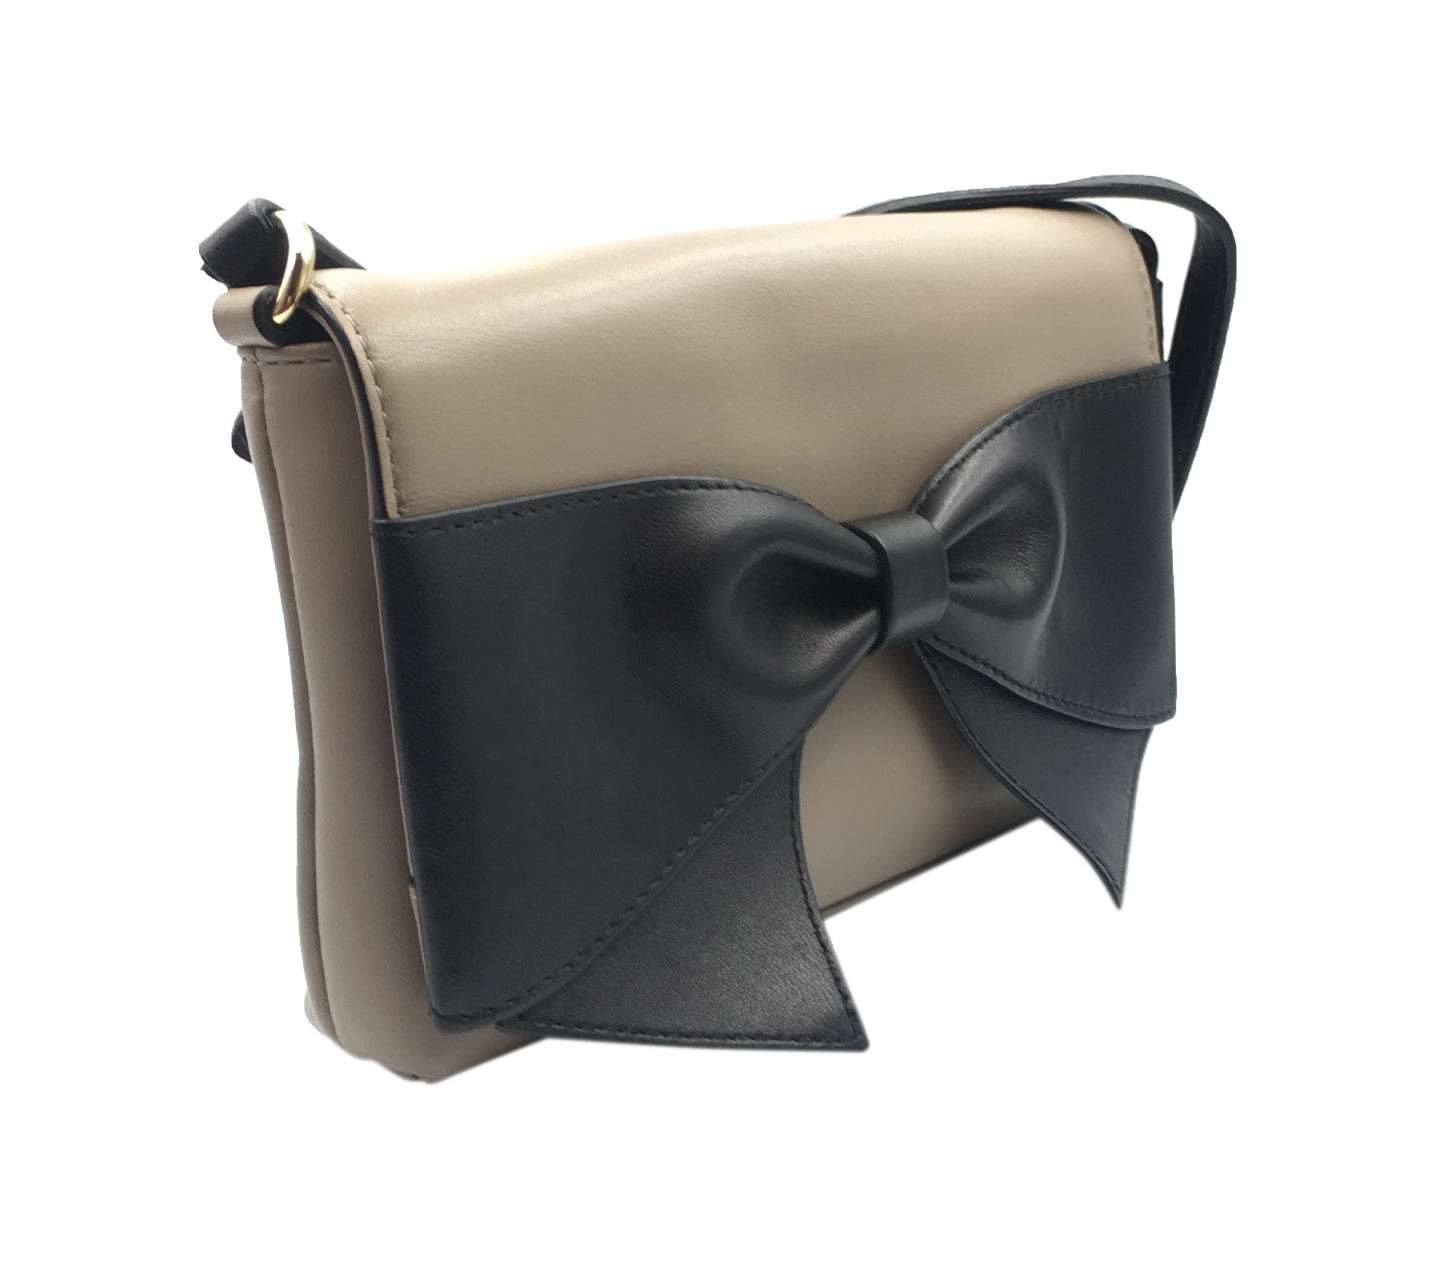 Kate Spade New York Black & Taupe Sling Bag